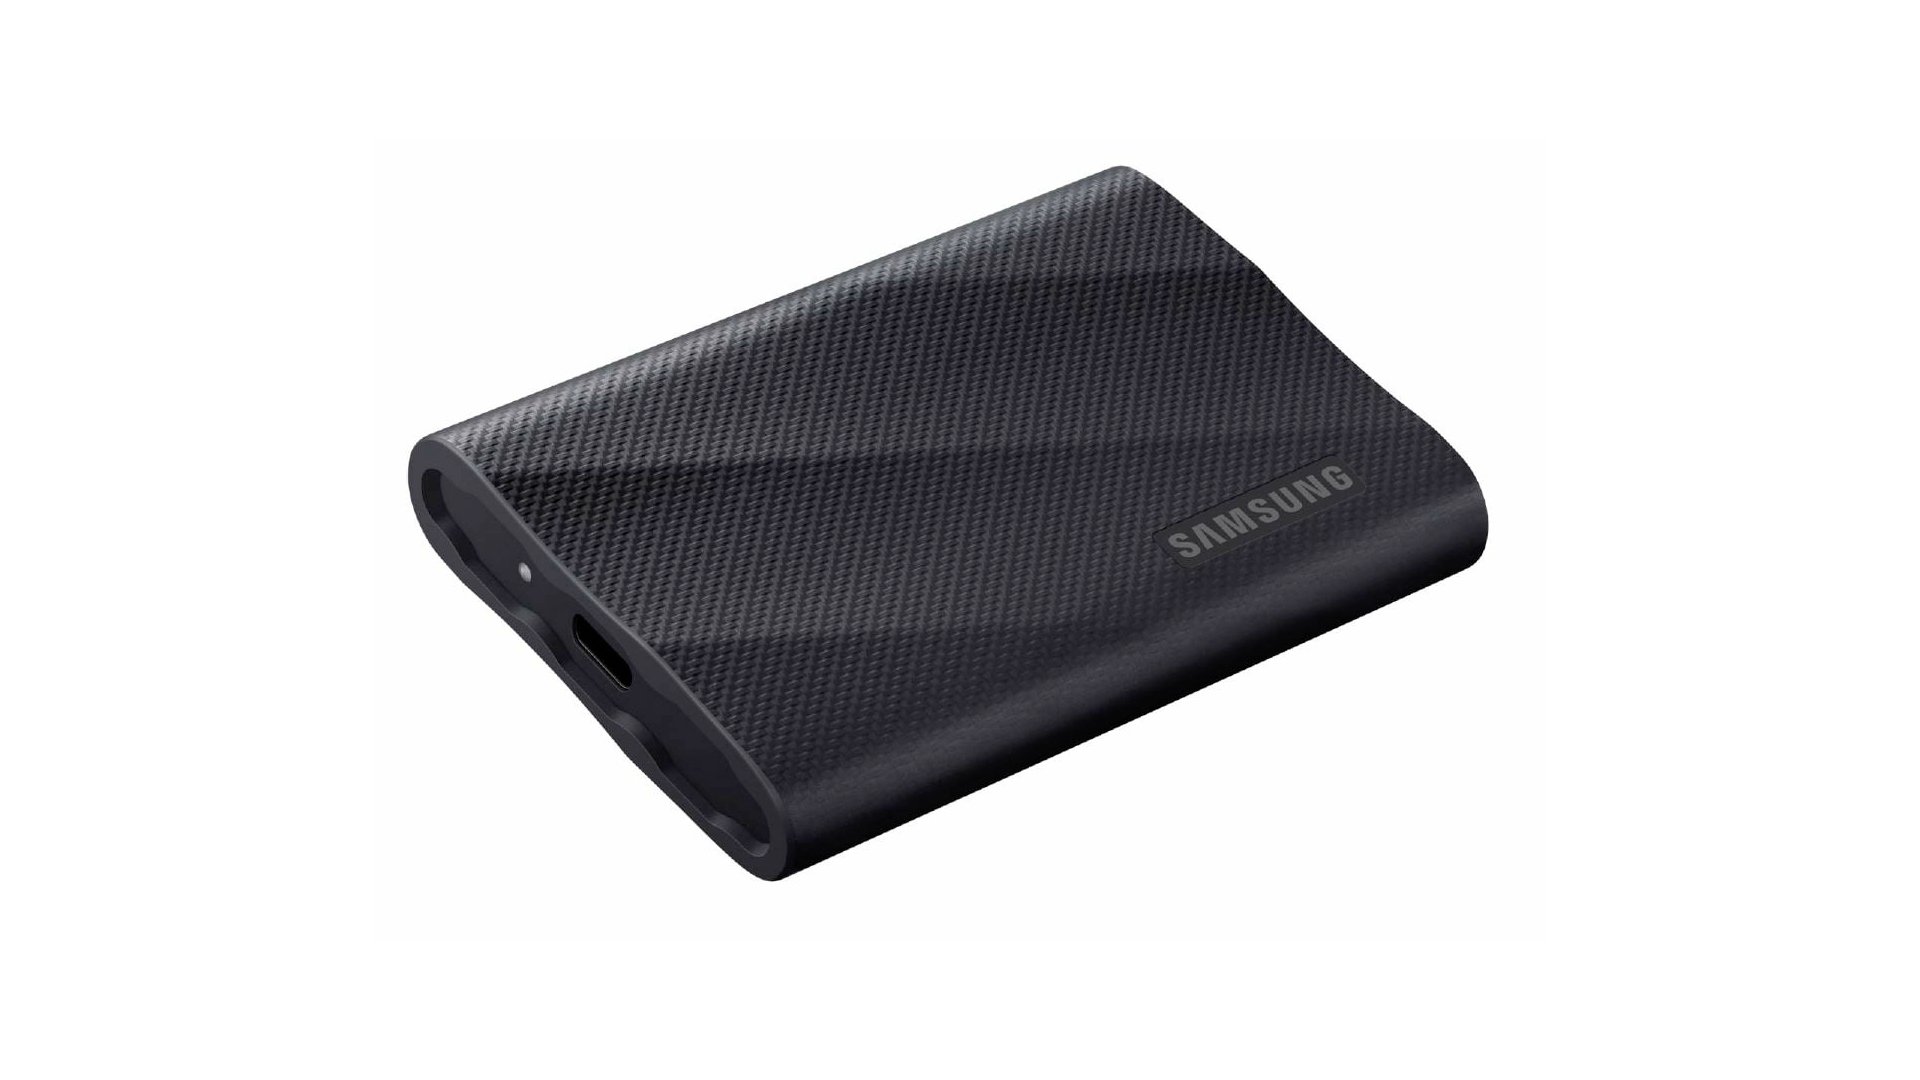 Samsung's new Portable SSD uses Thunderbolt 3 for lightning-fast